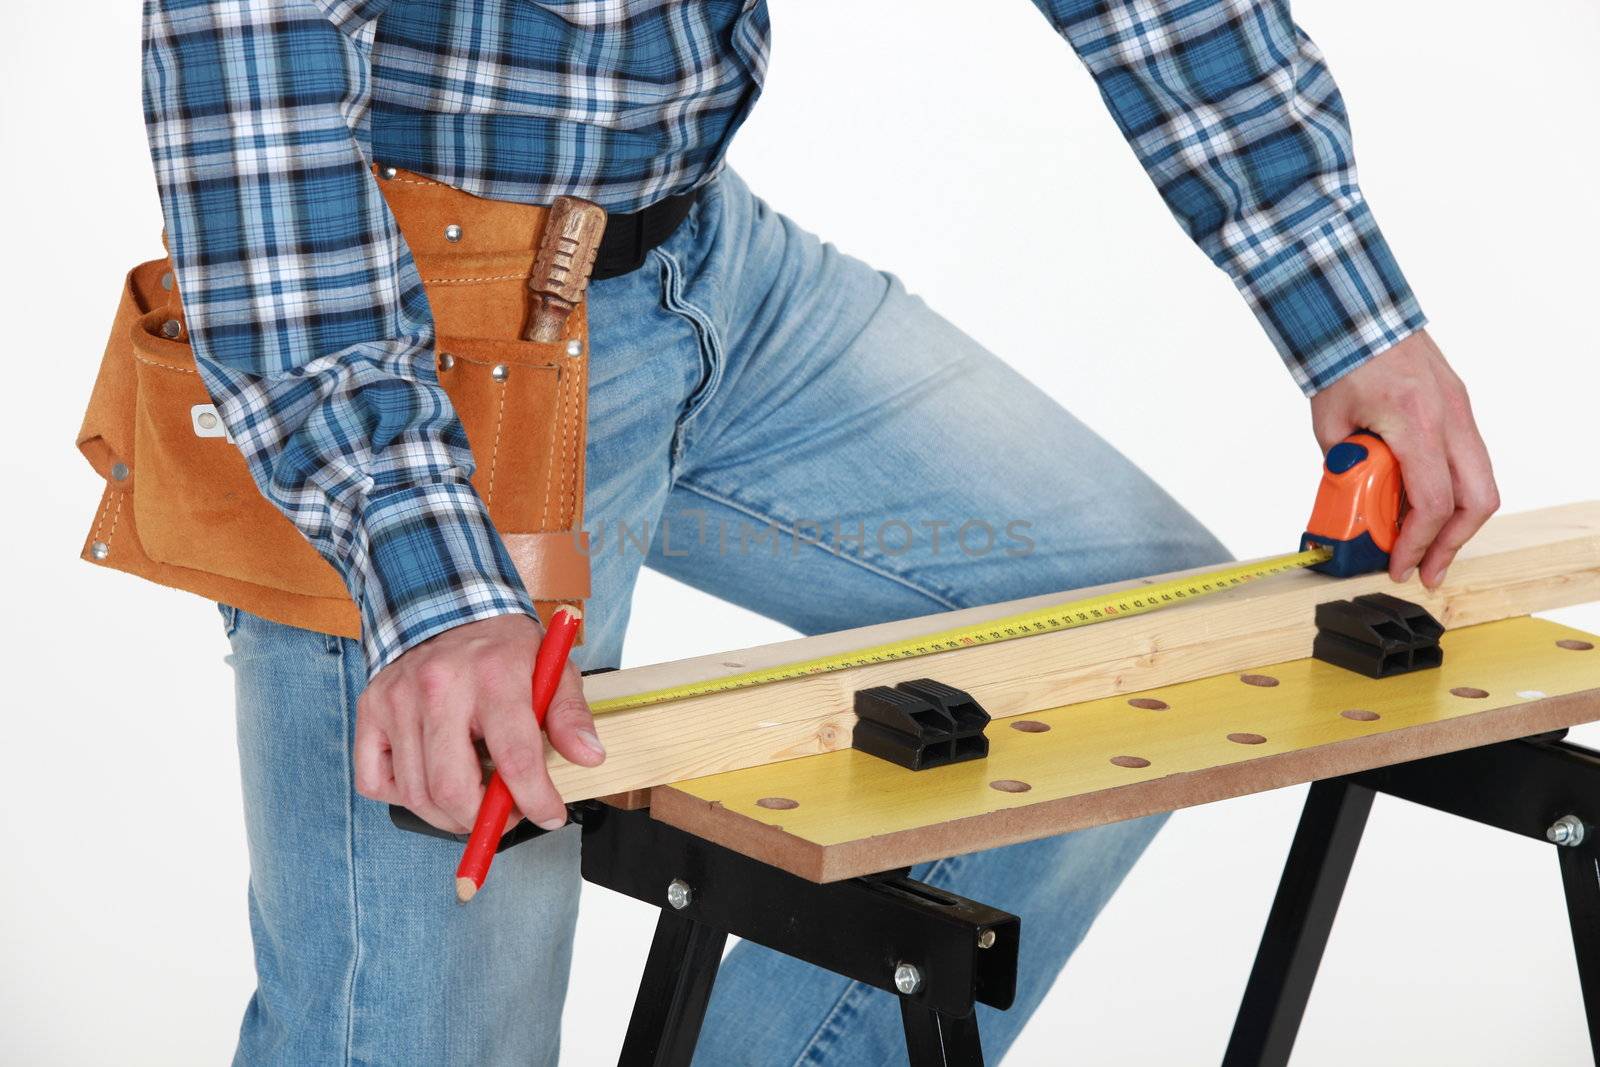 Carpenter measuring wood by phovoir